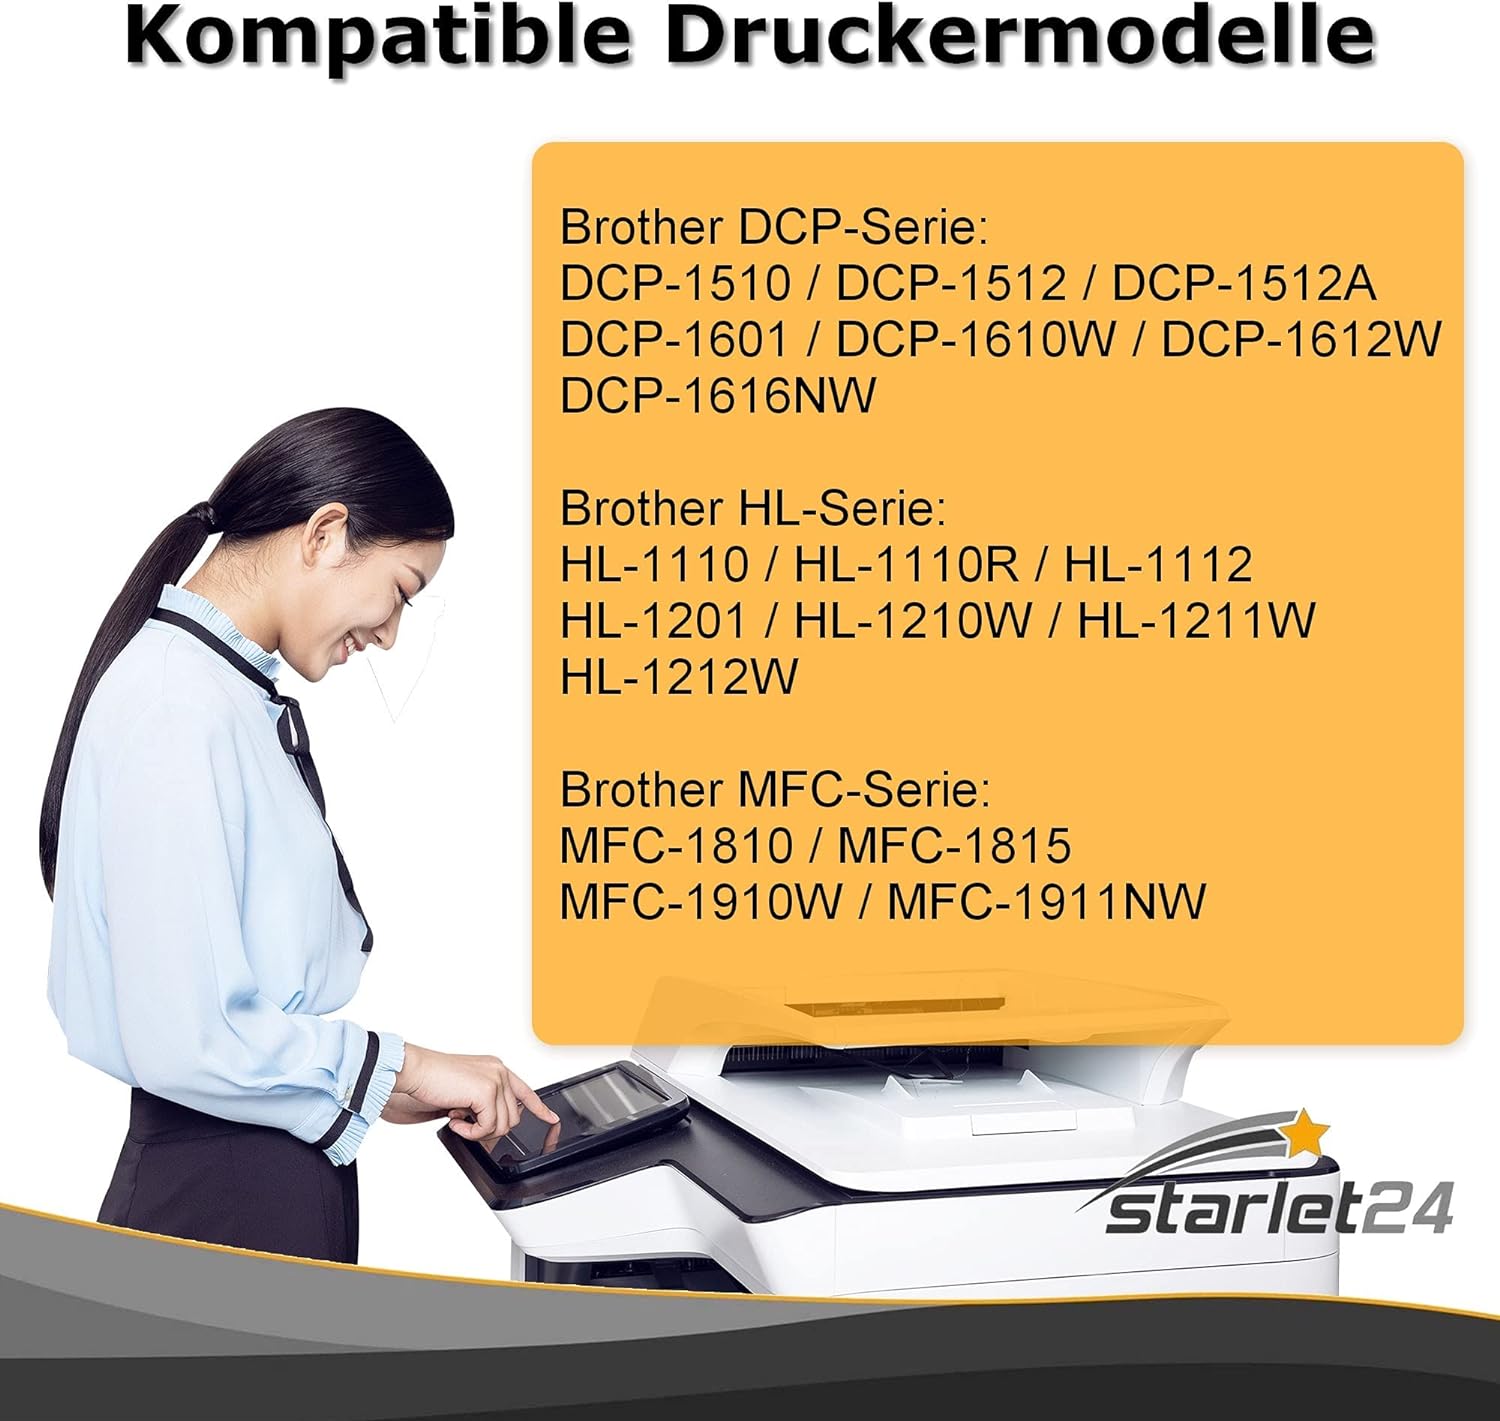 D&C Toner TN1050 BK (Schwarz), kompatibler Toner für Brother DCP-1510 DCP-1610W DCP-1612W DCP-1512 für MFC-1910W MFC-1810 HL-1110 HL-1212W HL-1210W HL-1112